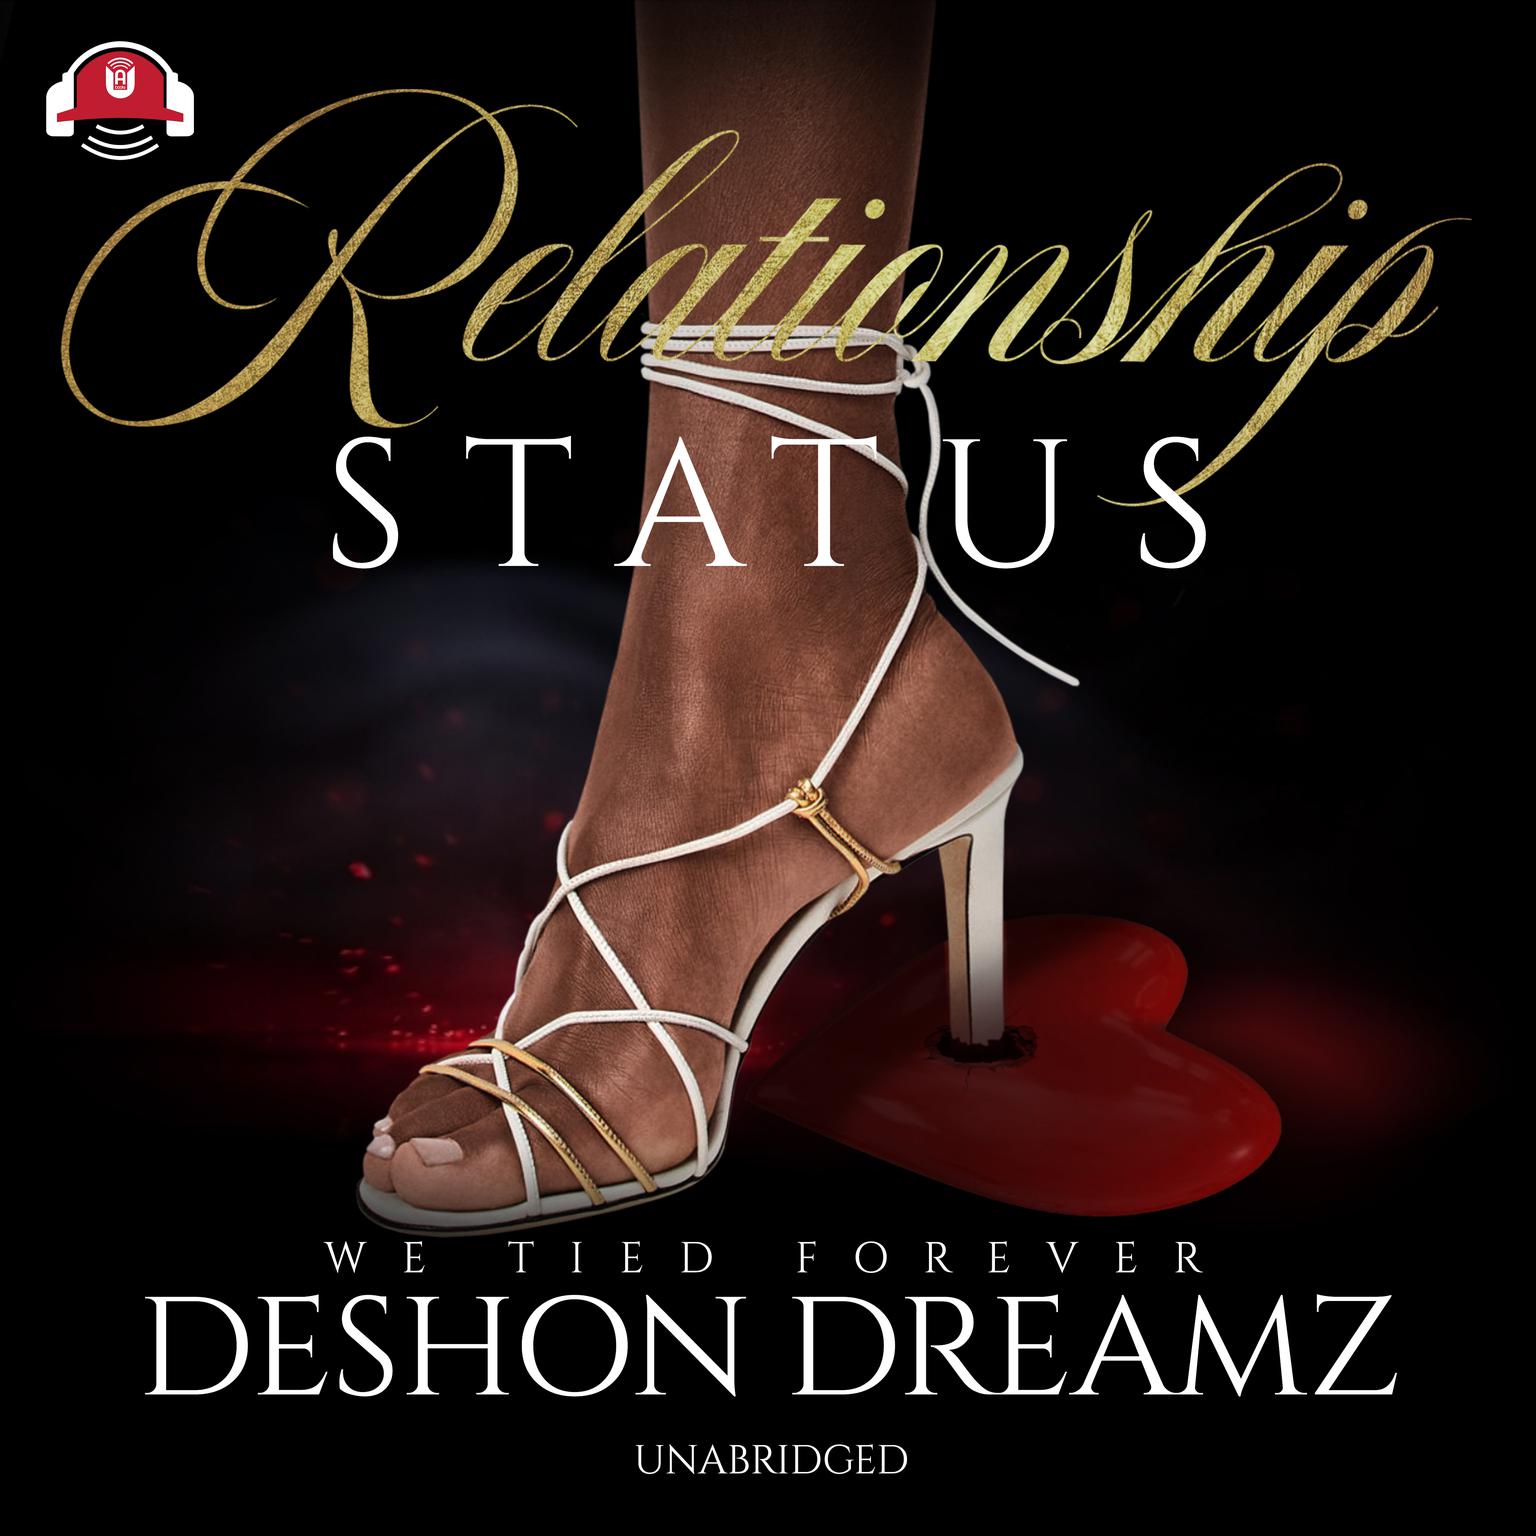 Relationship Status Audiobook, by Deshon Dreamz